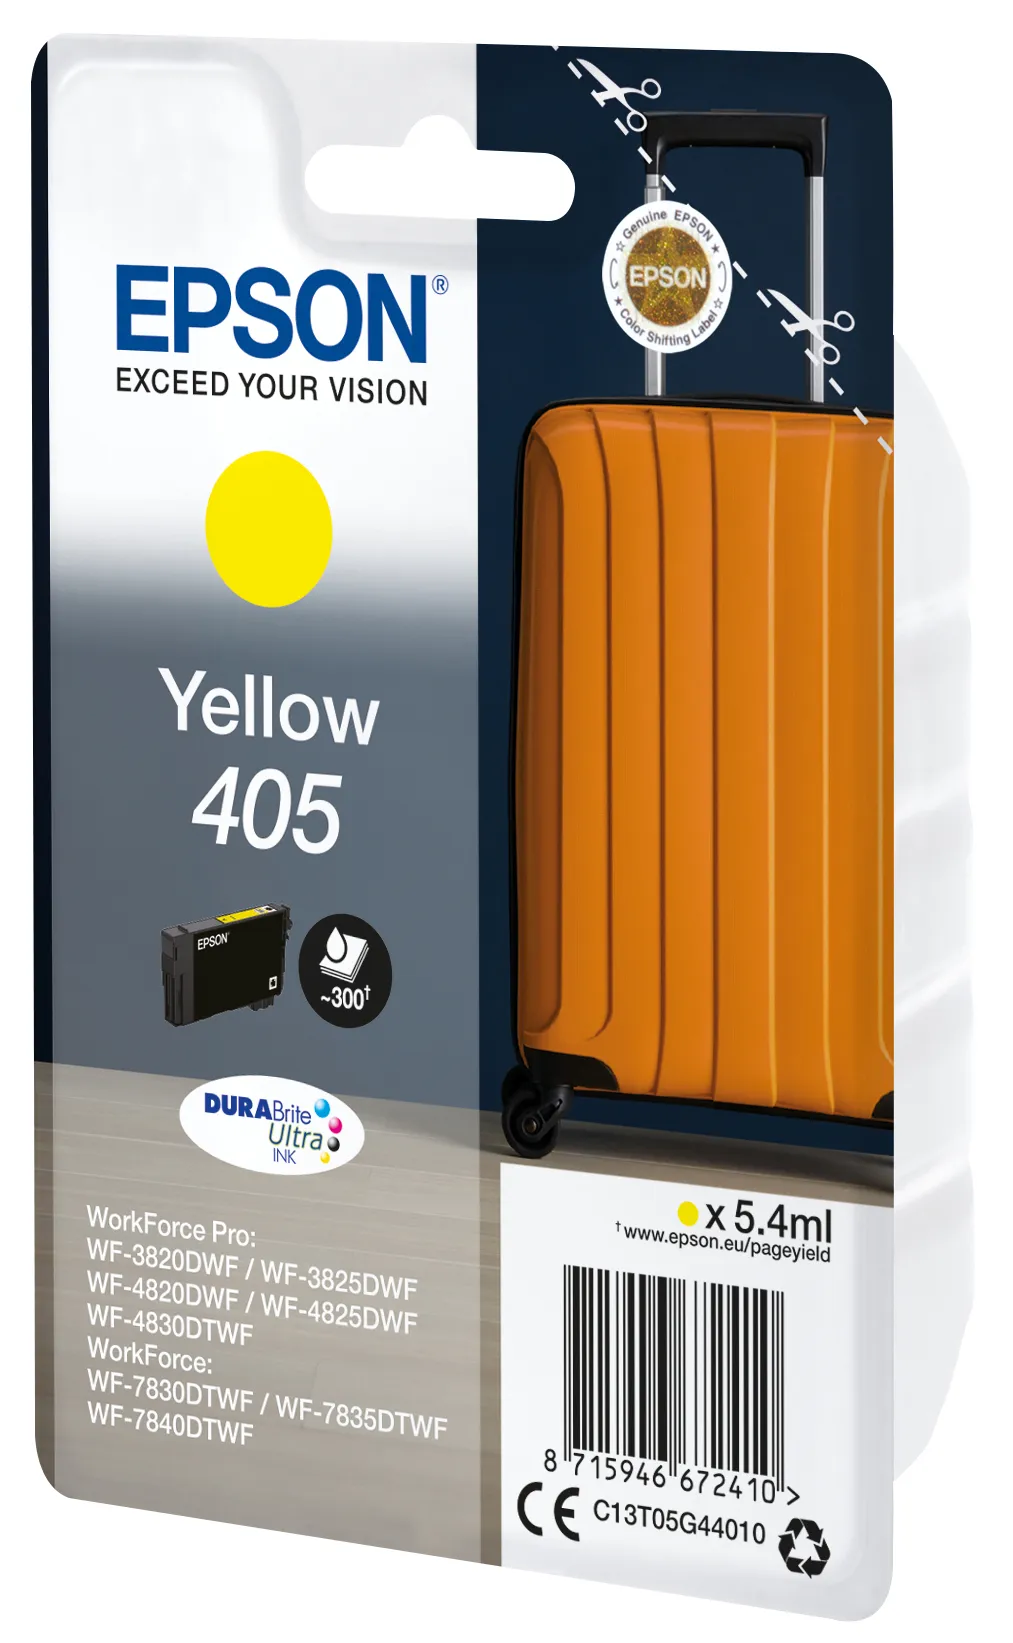 Vente EPSON Singlepack Yellow 405 DURABrite Ultra Ink Epson au meilleur prix - visuel 4